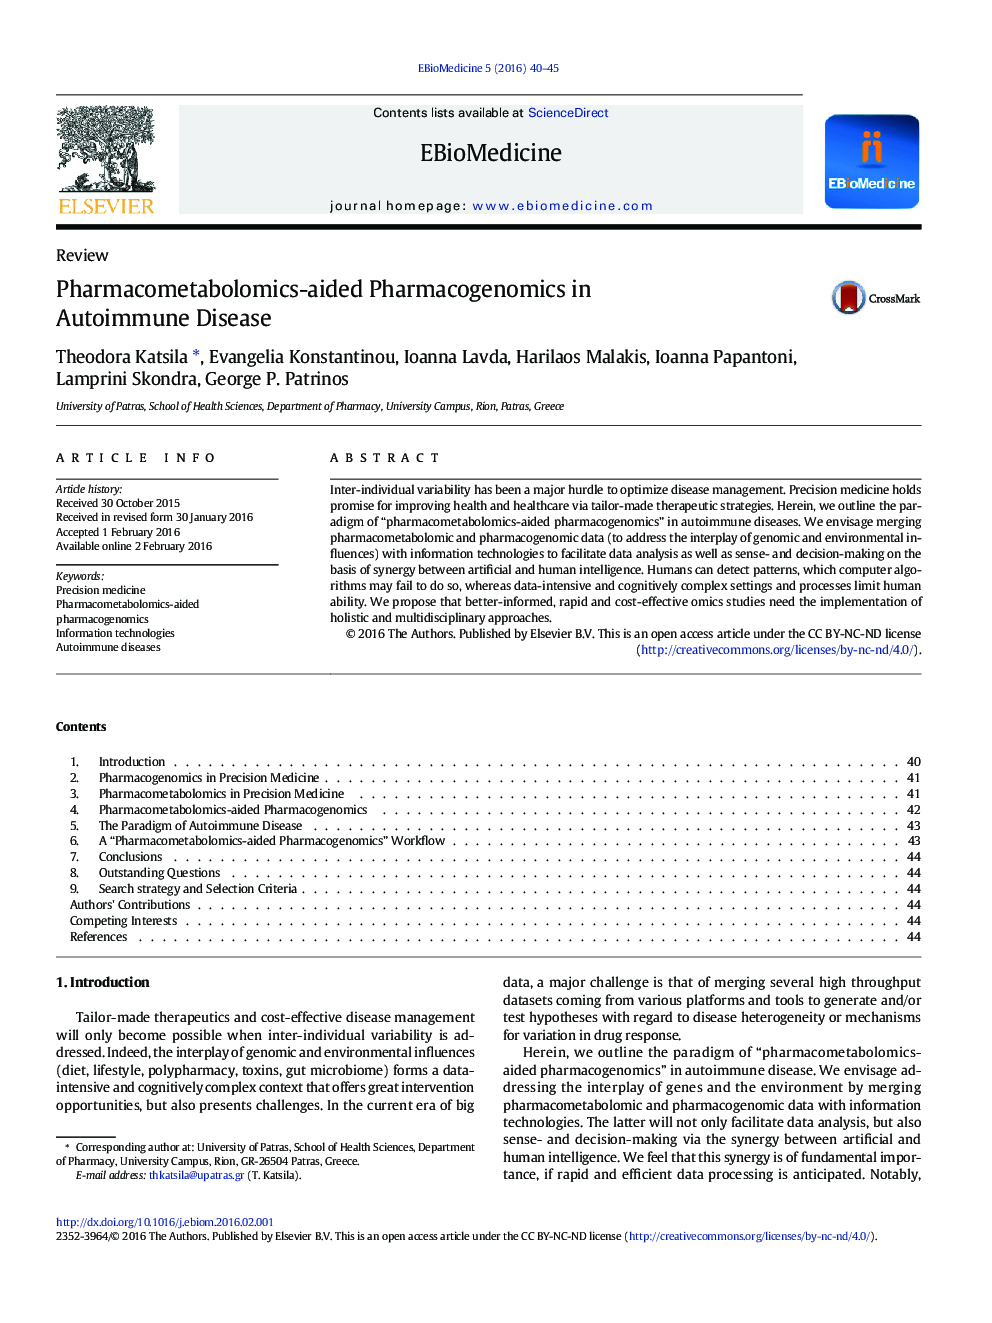 Pharmacometabolomics-aided Pharmacogenomics in Autoimmune Disease